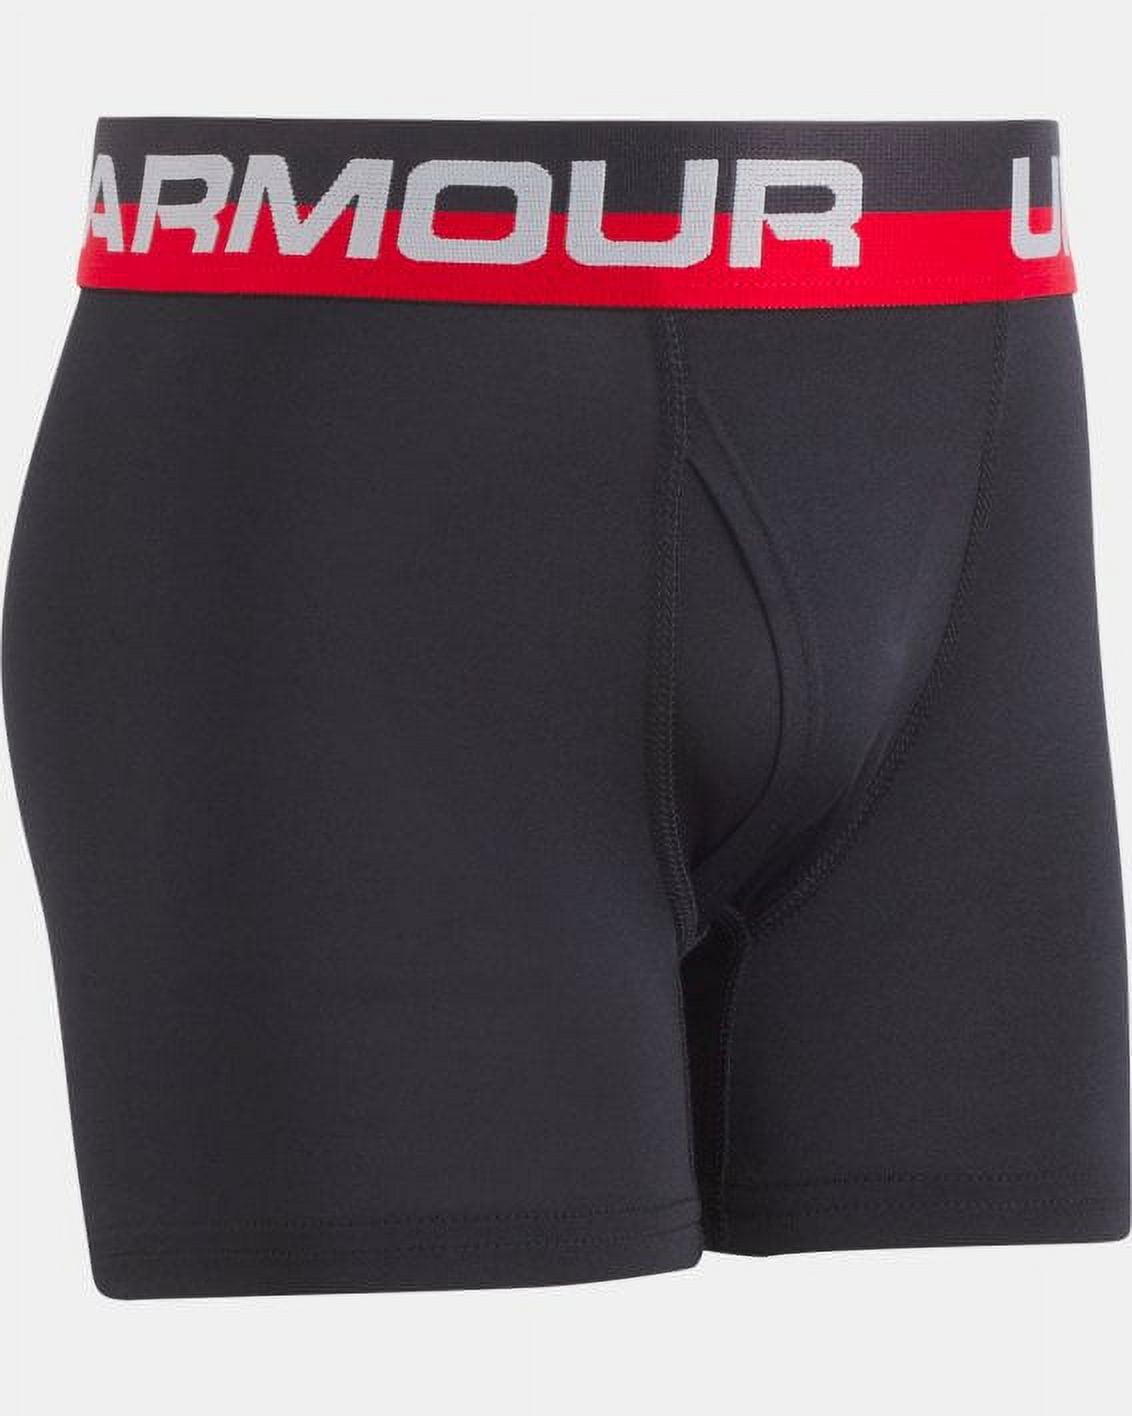 Under Armour Boys' Big Performance Boxer Briefs, Lightweight & Smooth  Stretch Fit, red/Black, YXL 